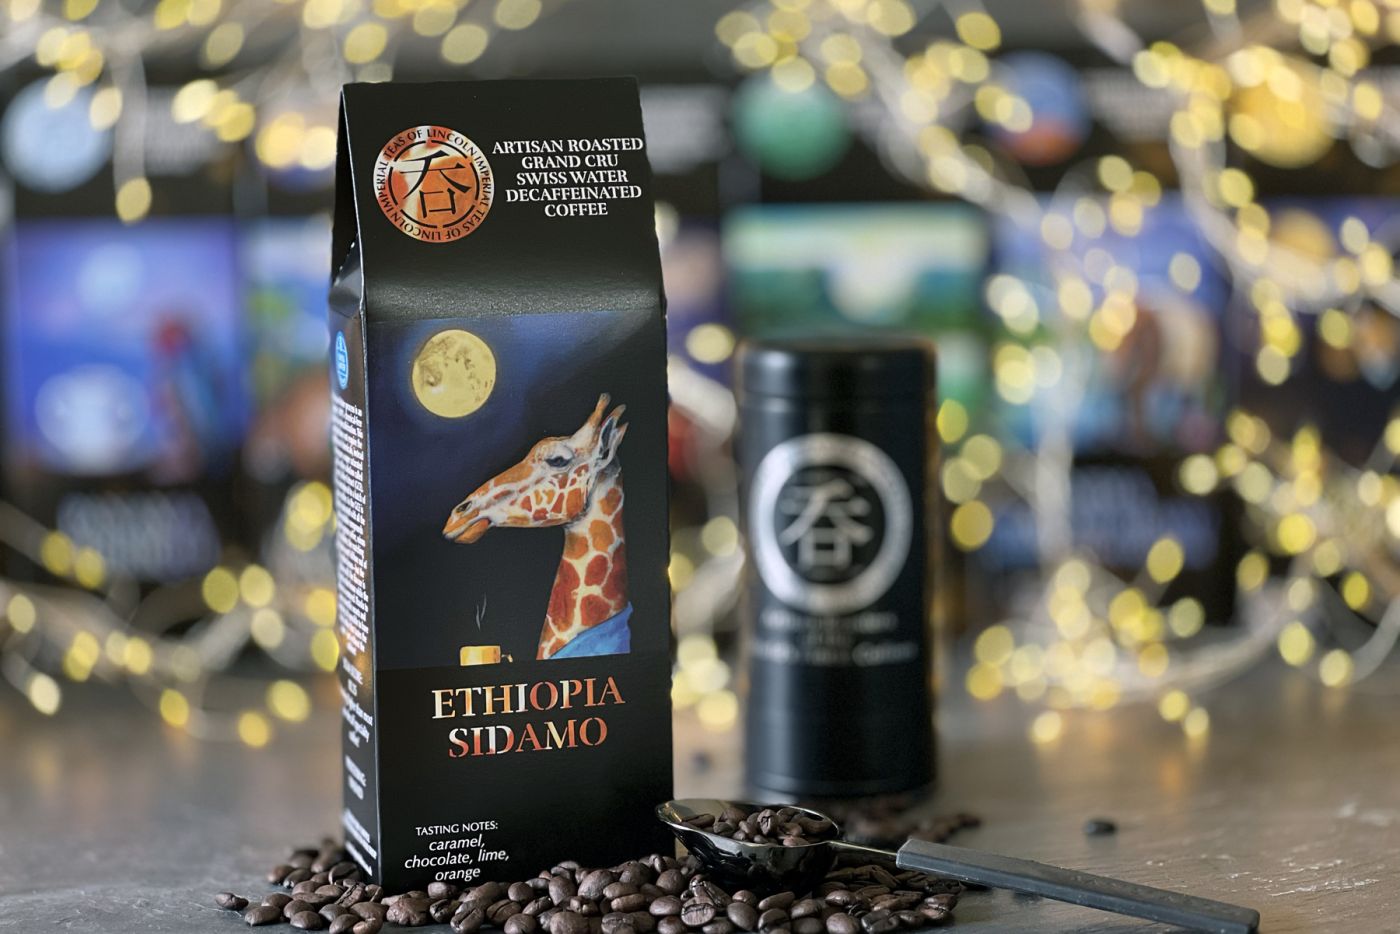 Ethiopia Sidamo Swiss Water Decaf Coffee